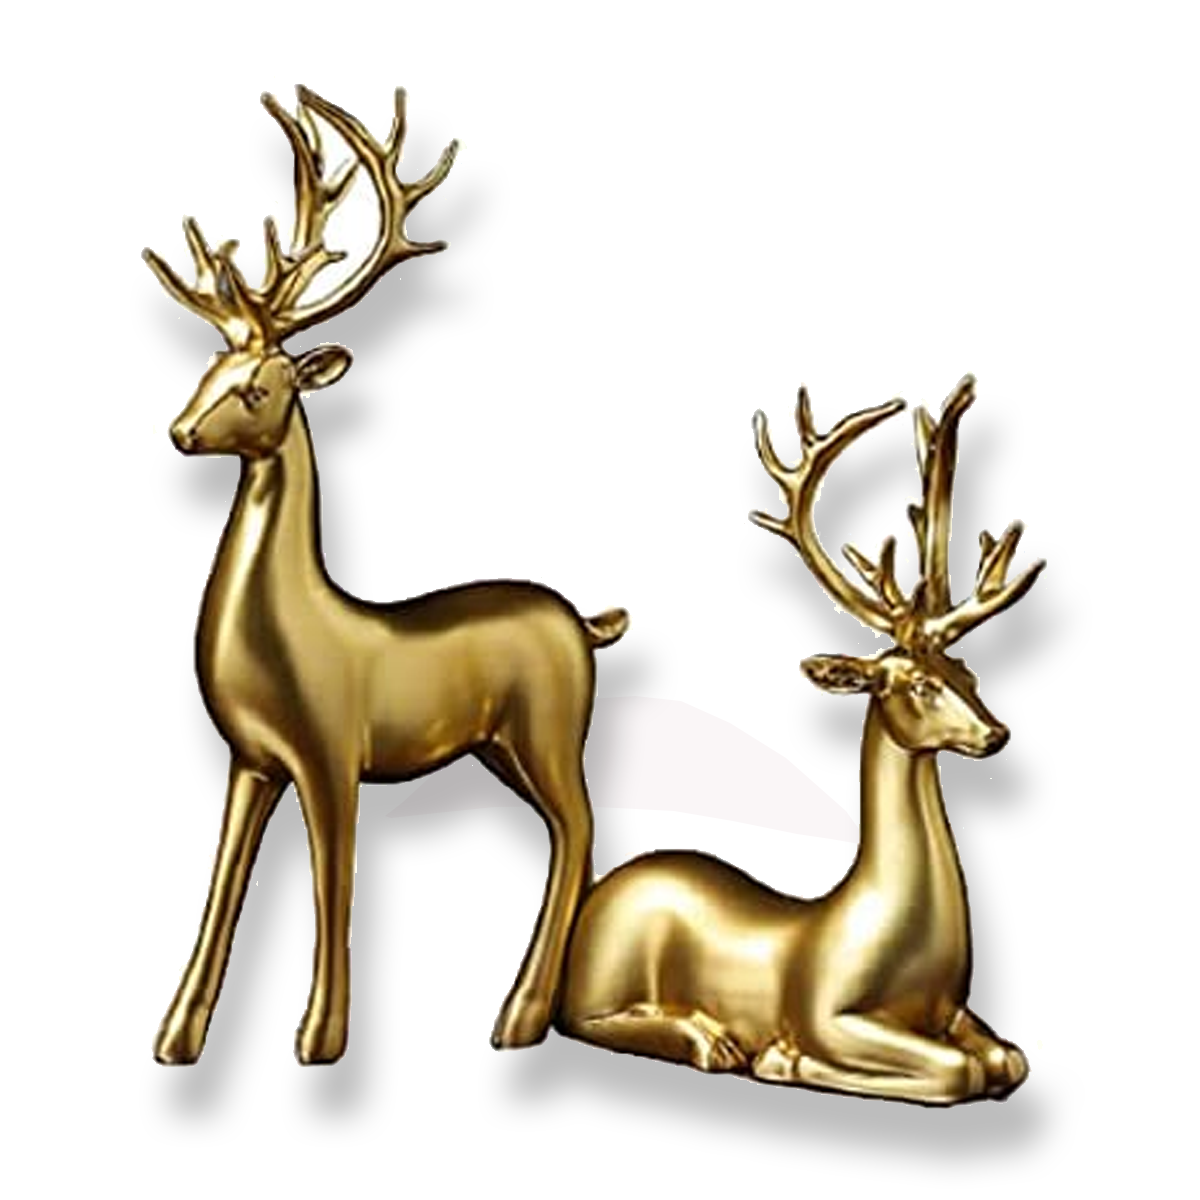 Set of 2 Modern Gold Deer Statue Sculpture Figurine Ornaments Gifts for Home Decoration - 17cm High, 12cm High